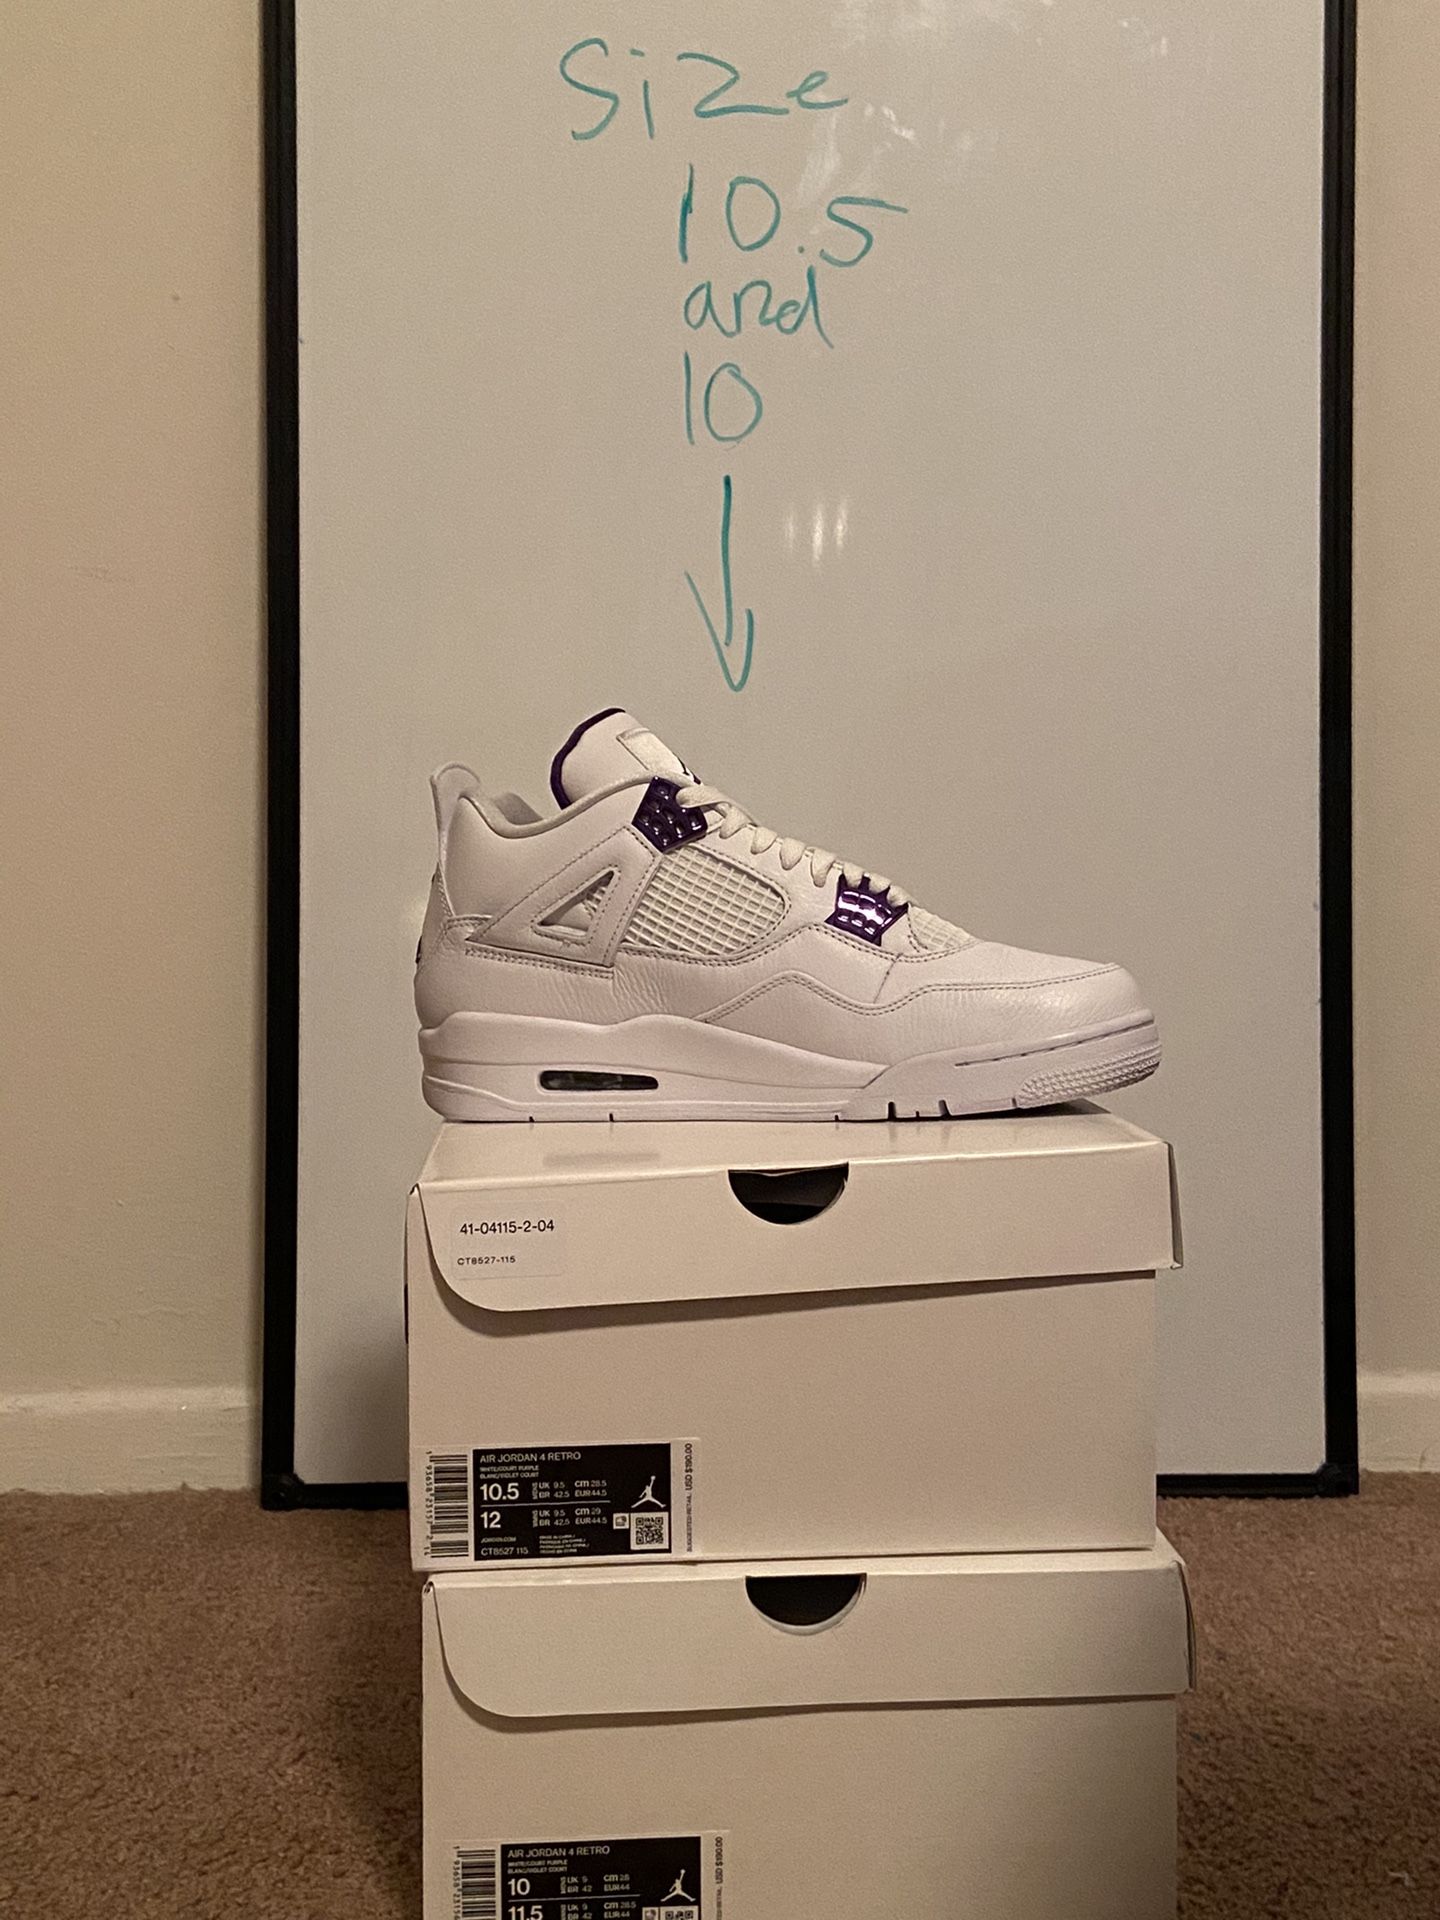 Air Jordan’s retro 4 purple